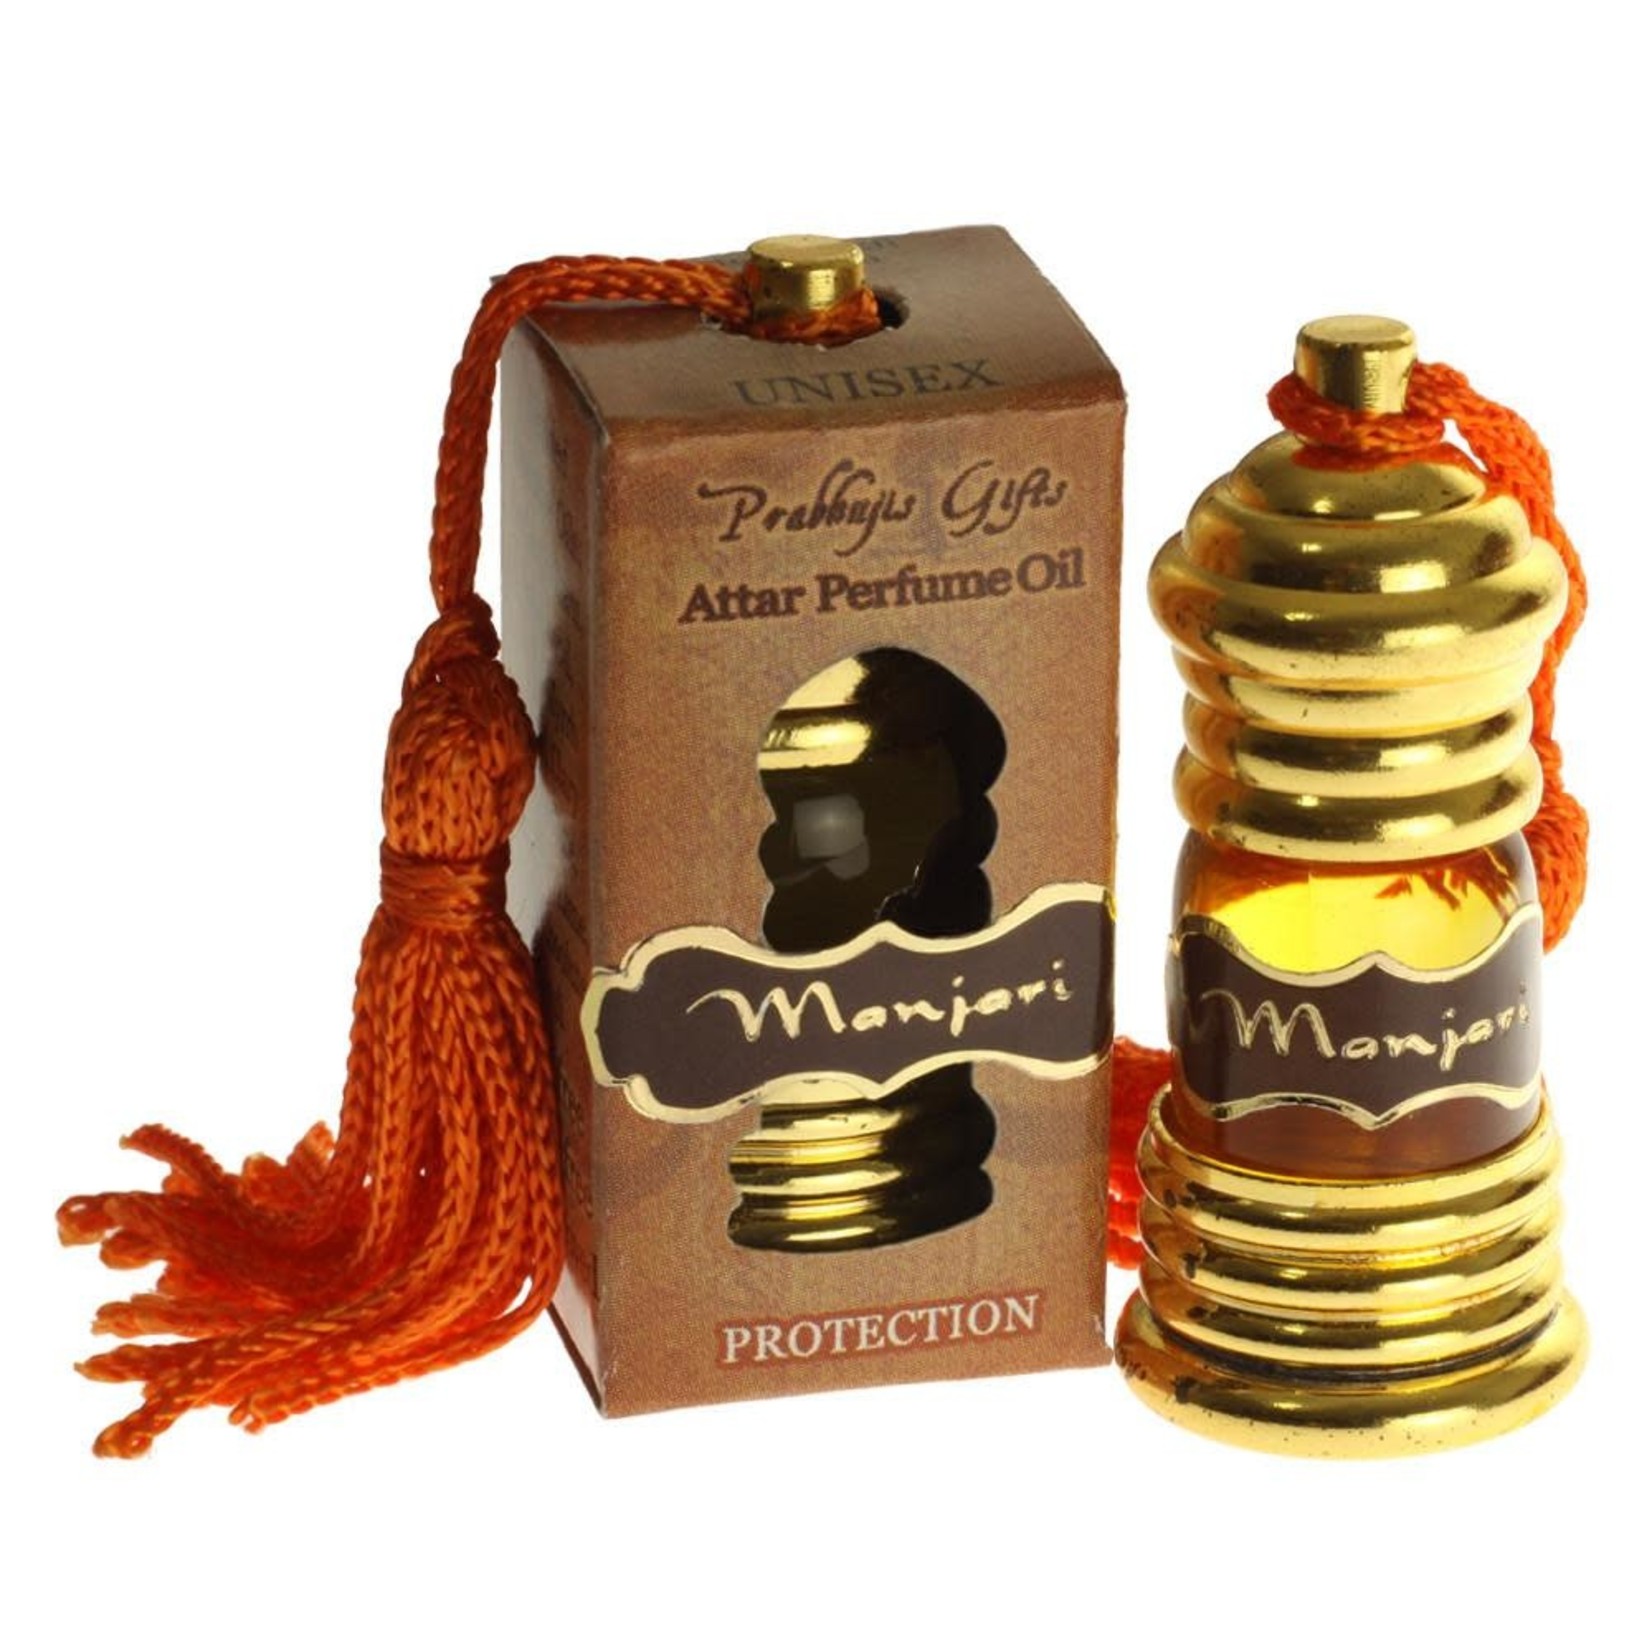 Prabhujis Gifts Perfume Attar Oil Manjari for Protection